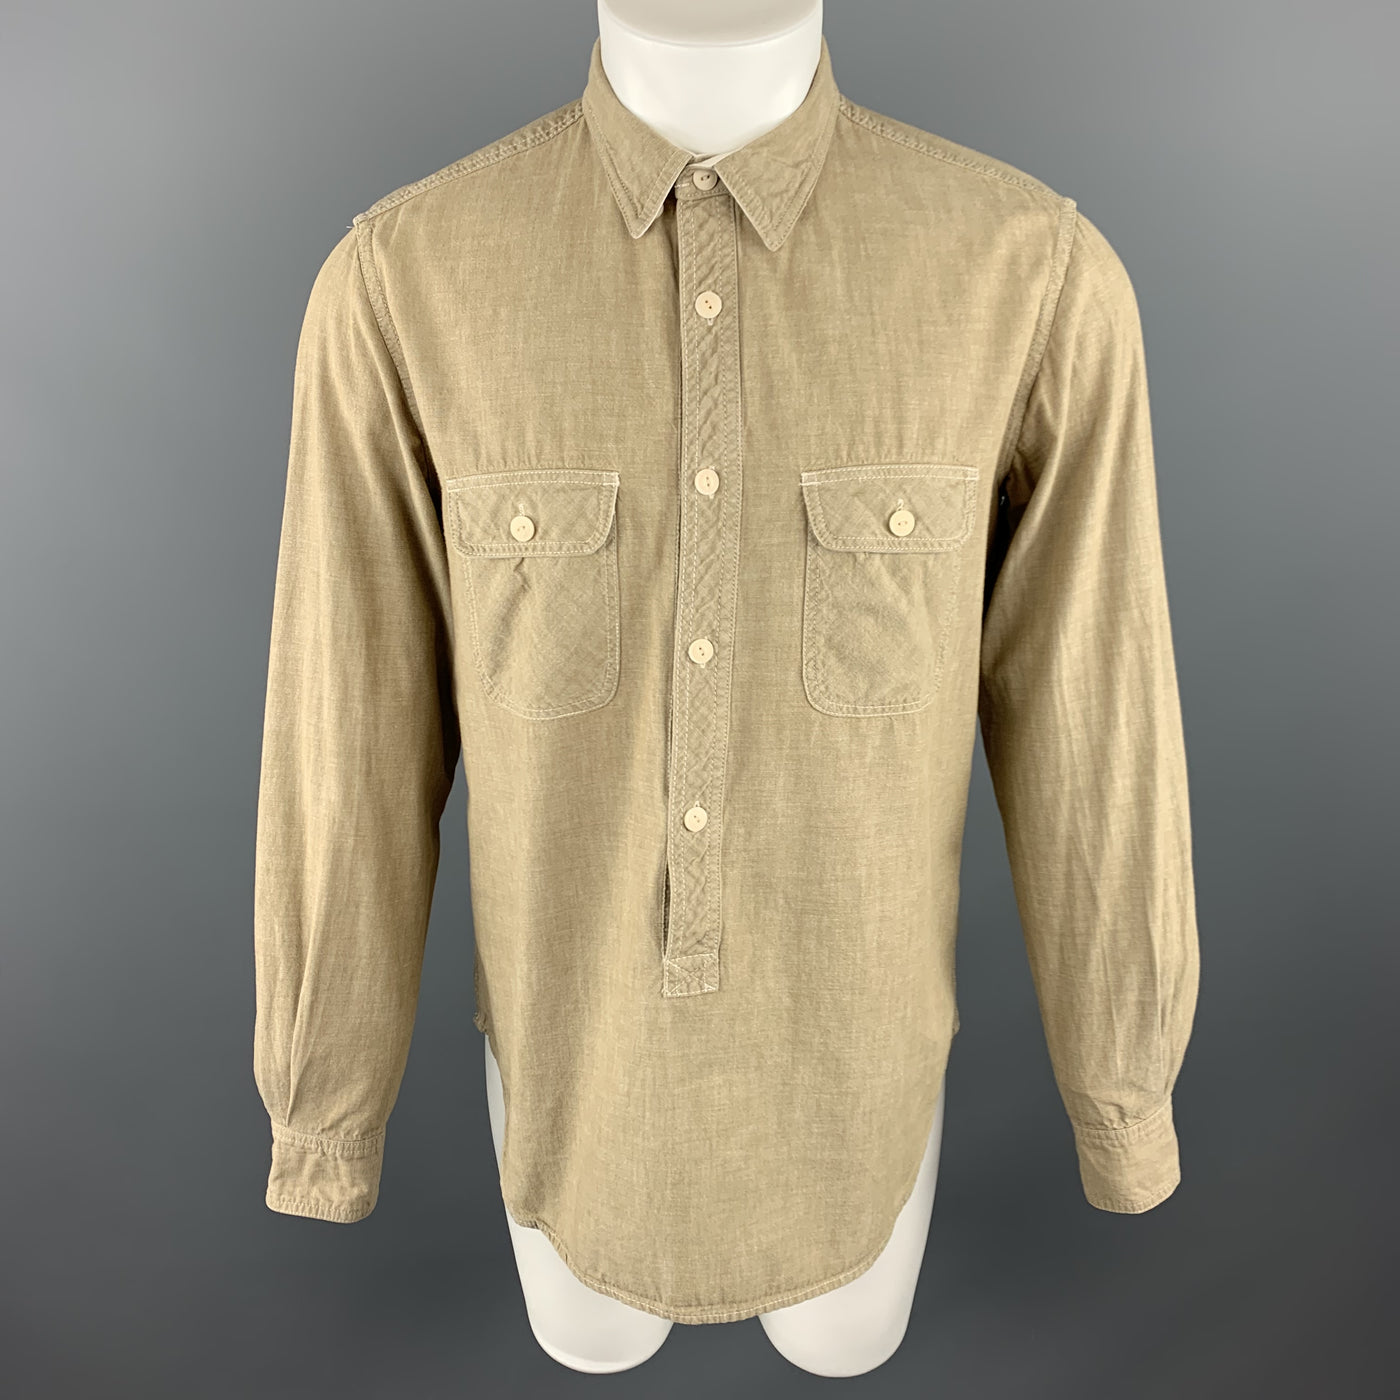 STEVEN ALAN Size M Khaki Solid Cotton Popover Long Sleeve Shirt